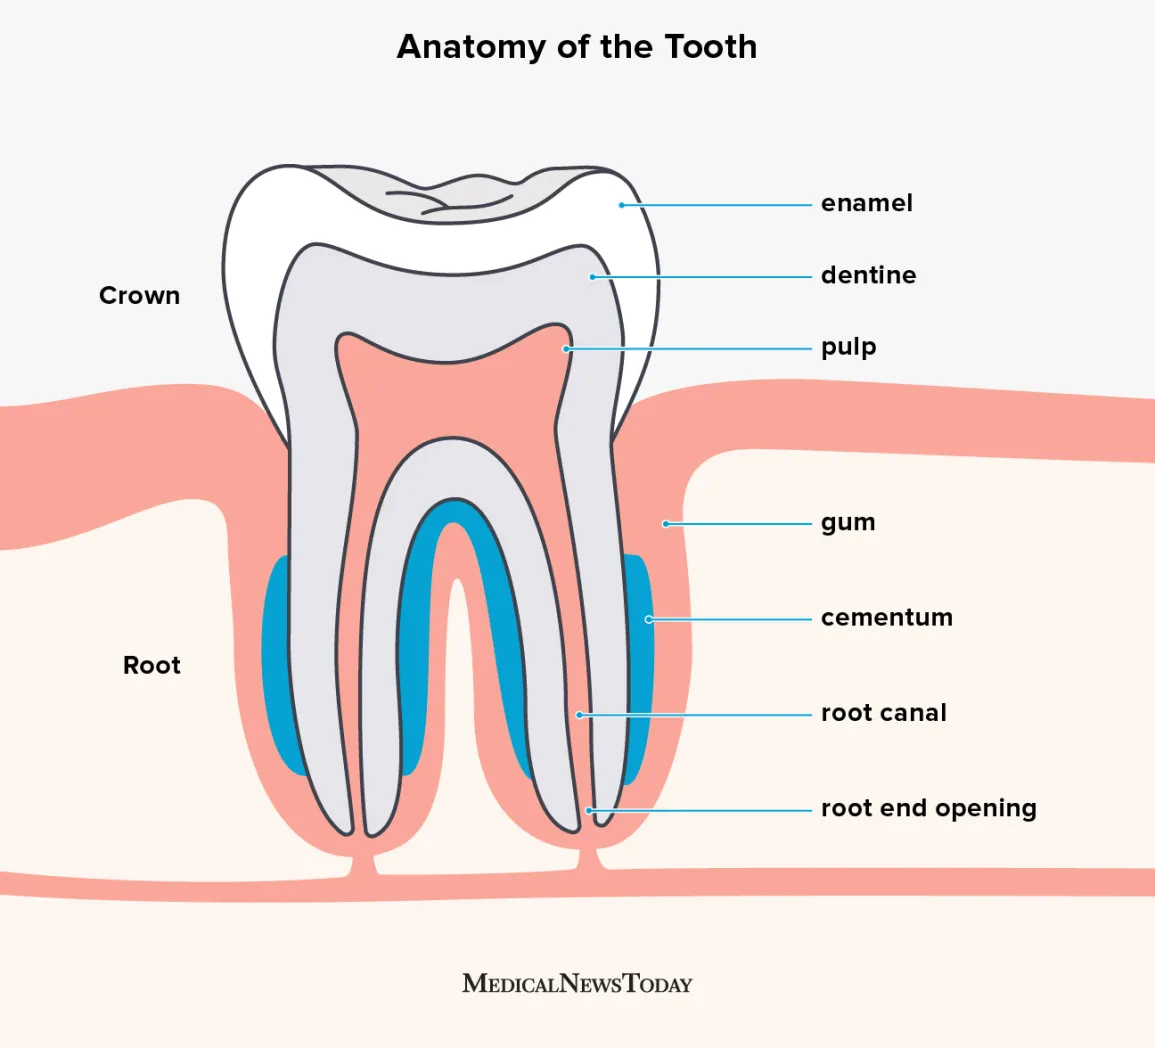 225349 anatomy ot the tooth 1296x1296 body.20200716143350801